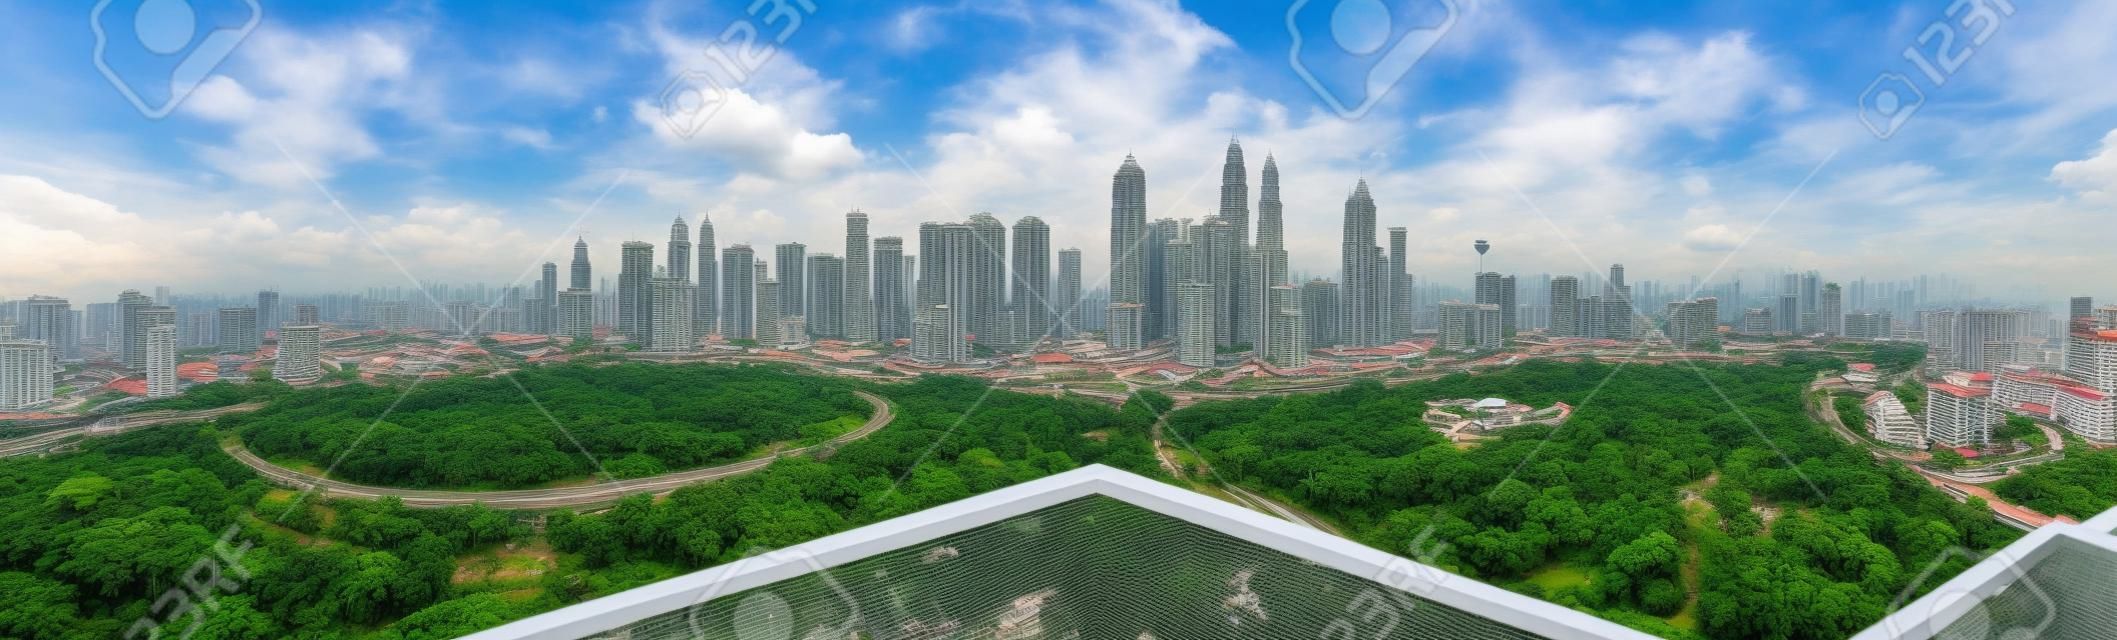 Open space balcony with Kuala Lumpur cityscape skyline view  .